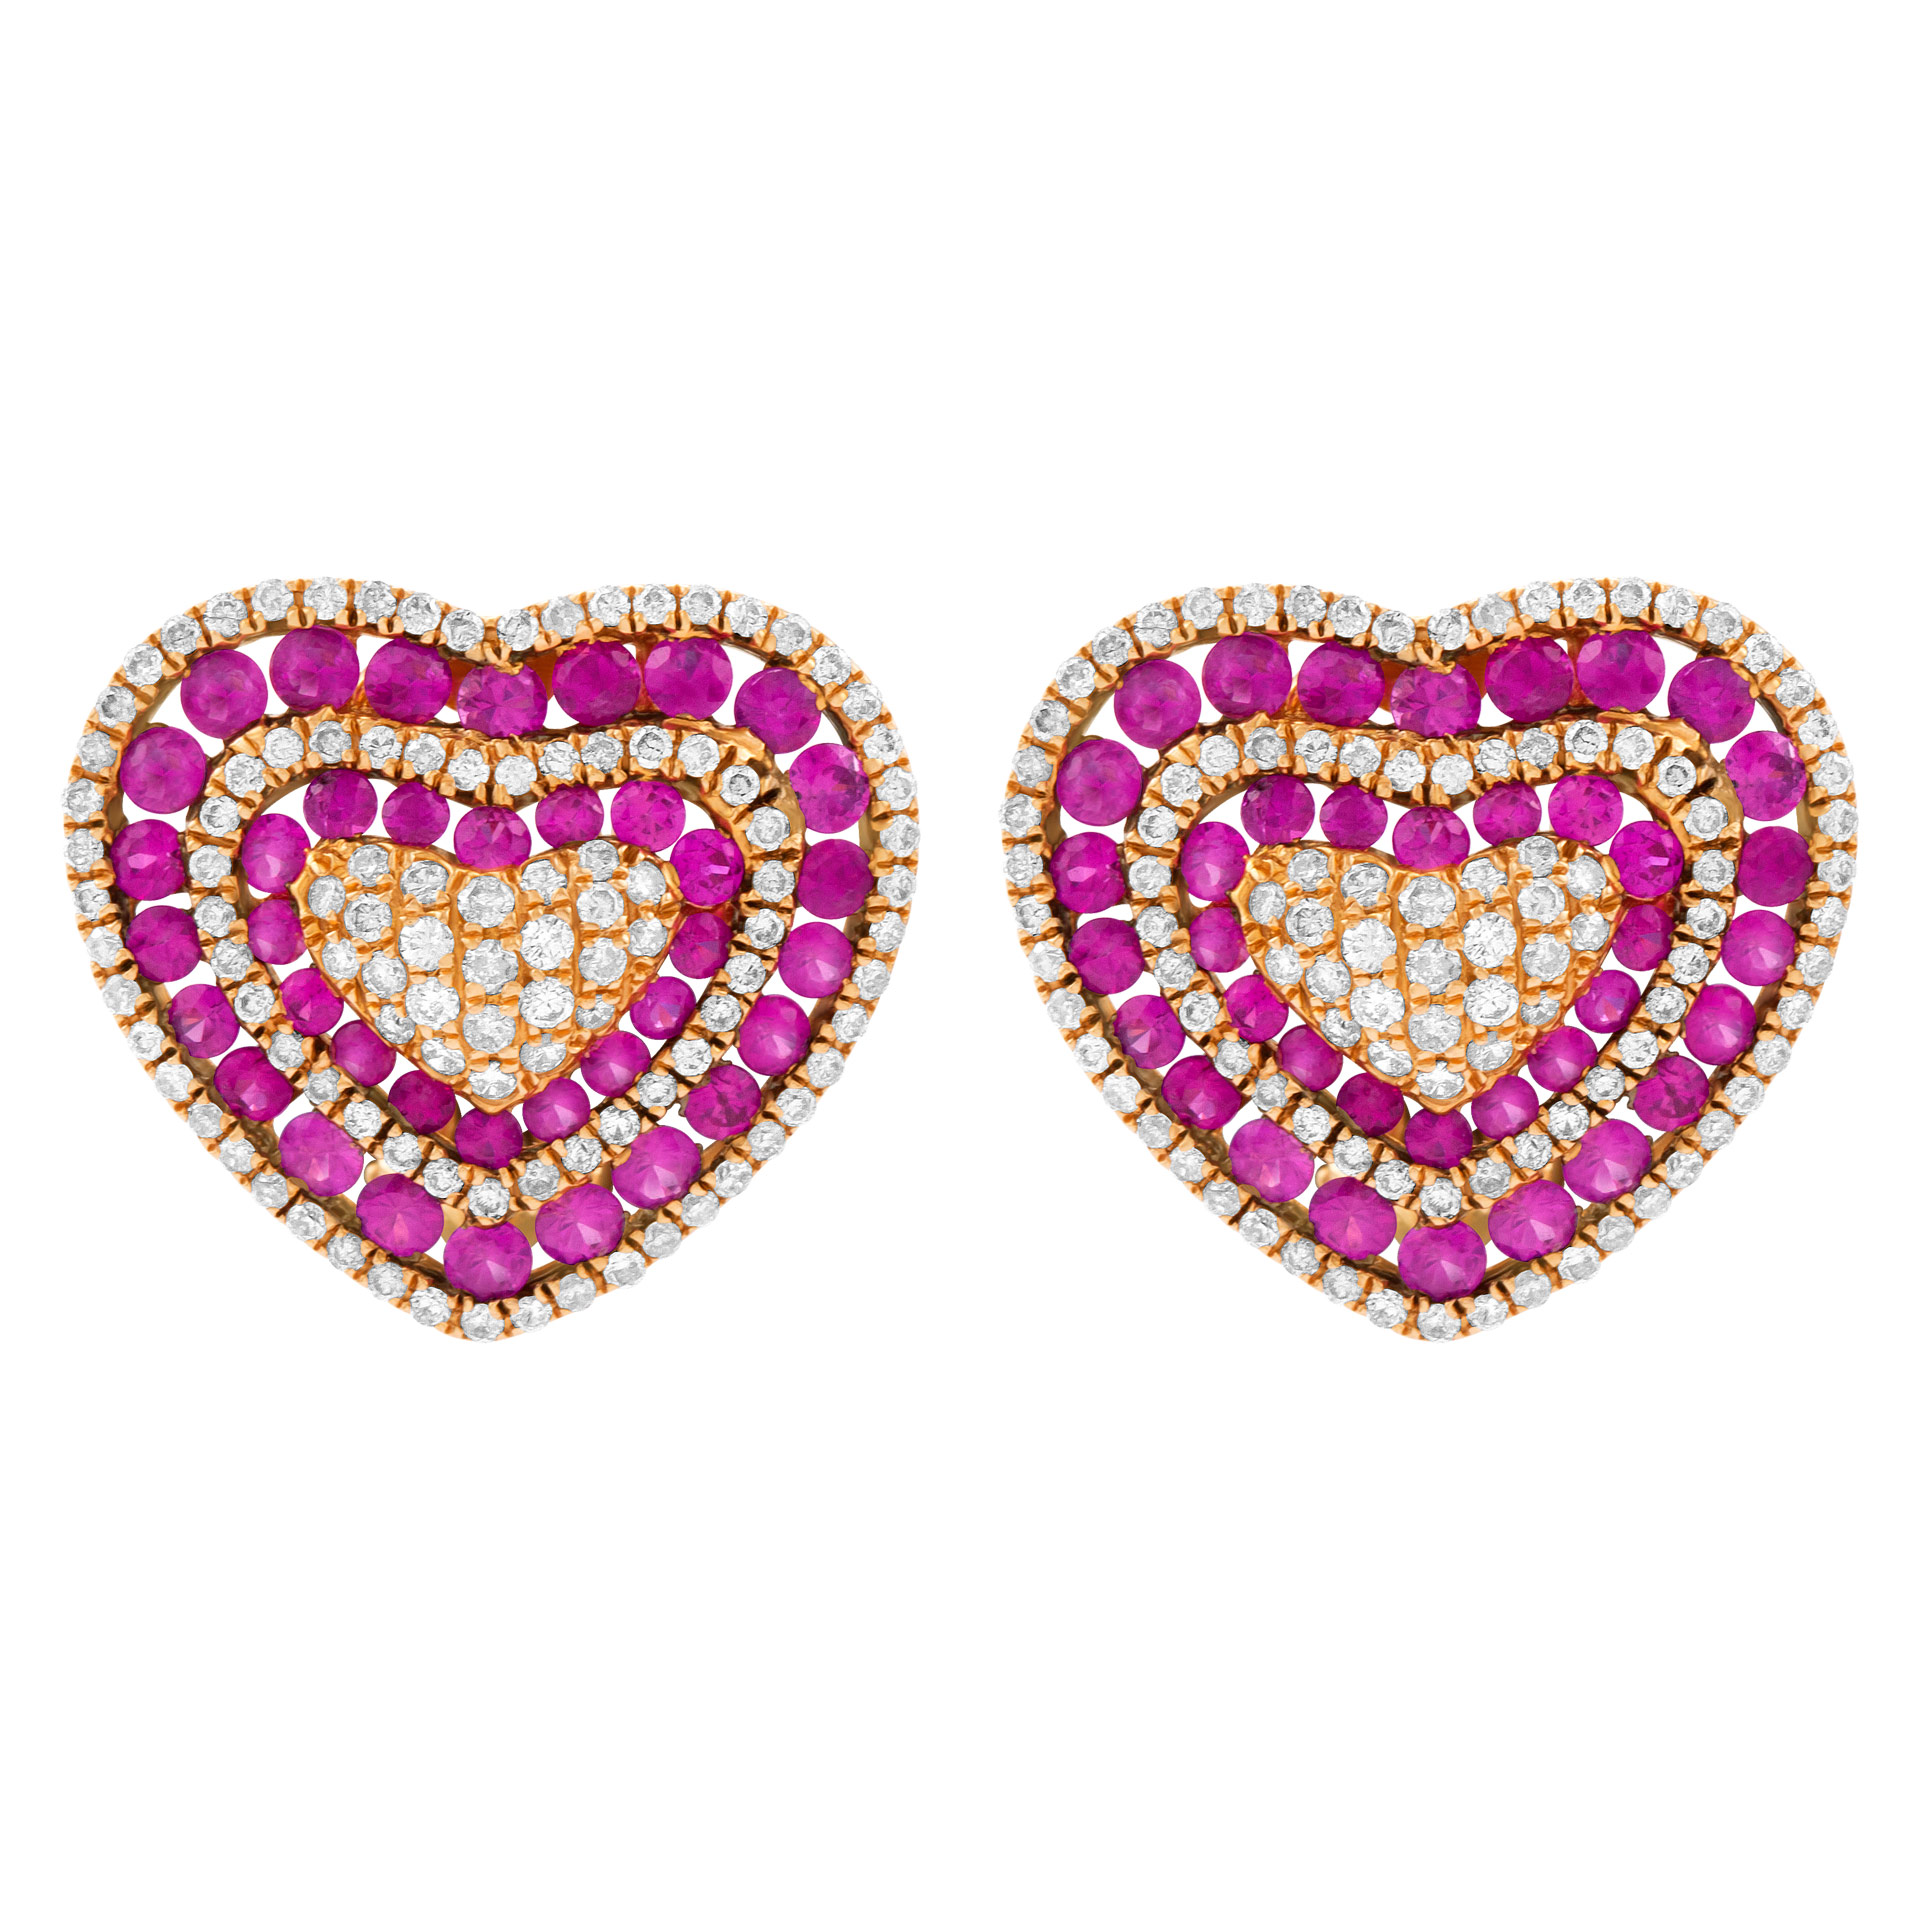 Diamond & ruby heart earrings in 18K pink gold. 2.94 cts in dias. 1.34 cts in rubies